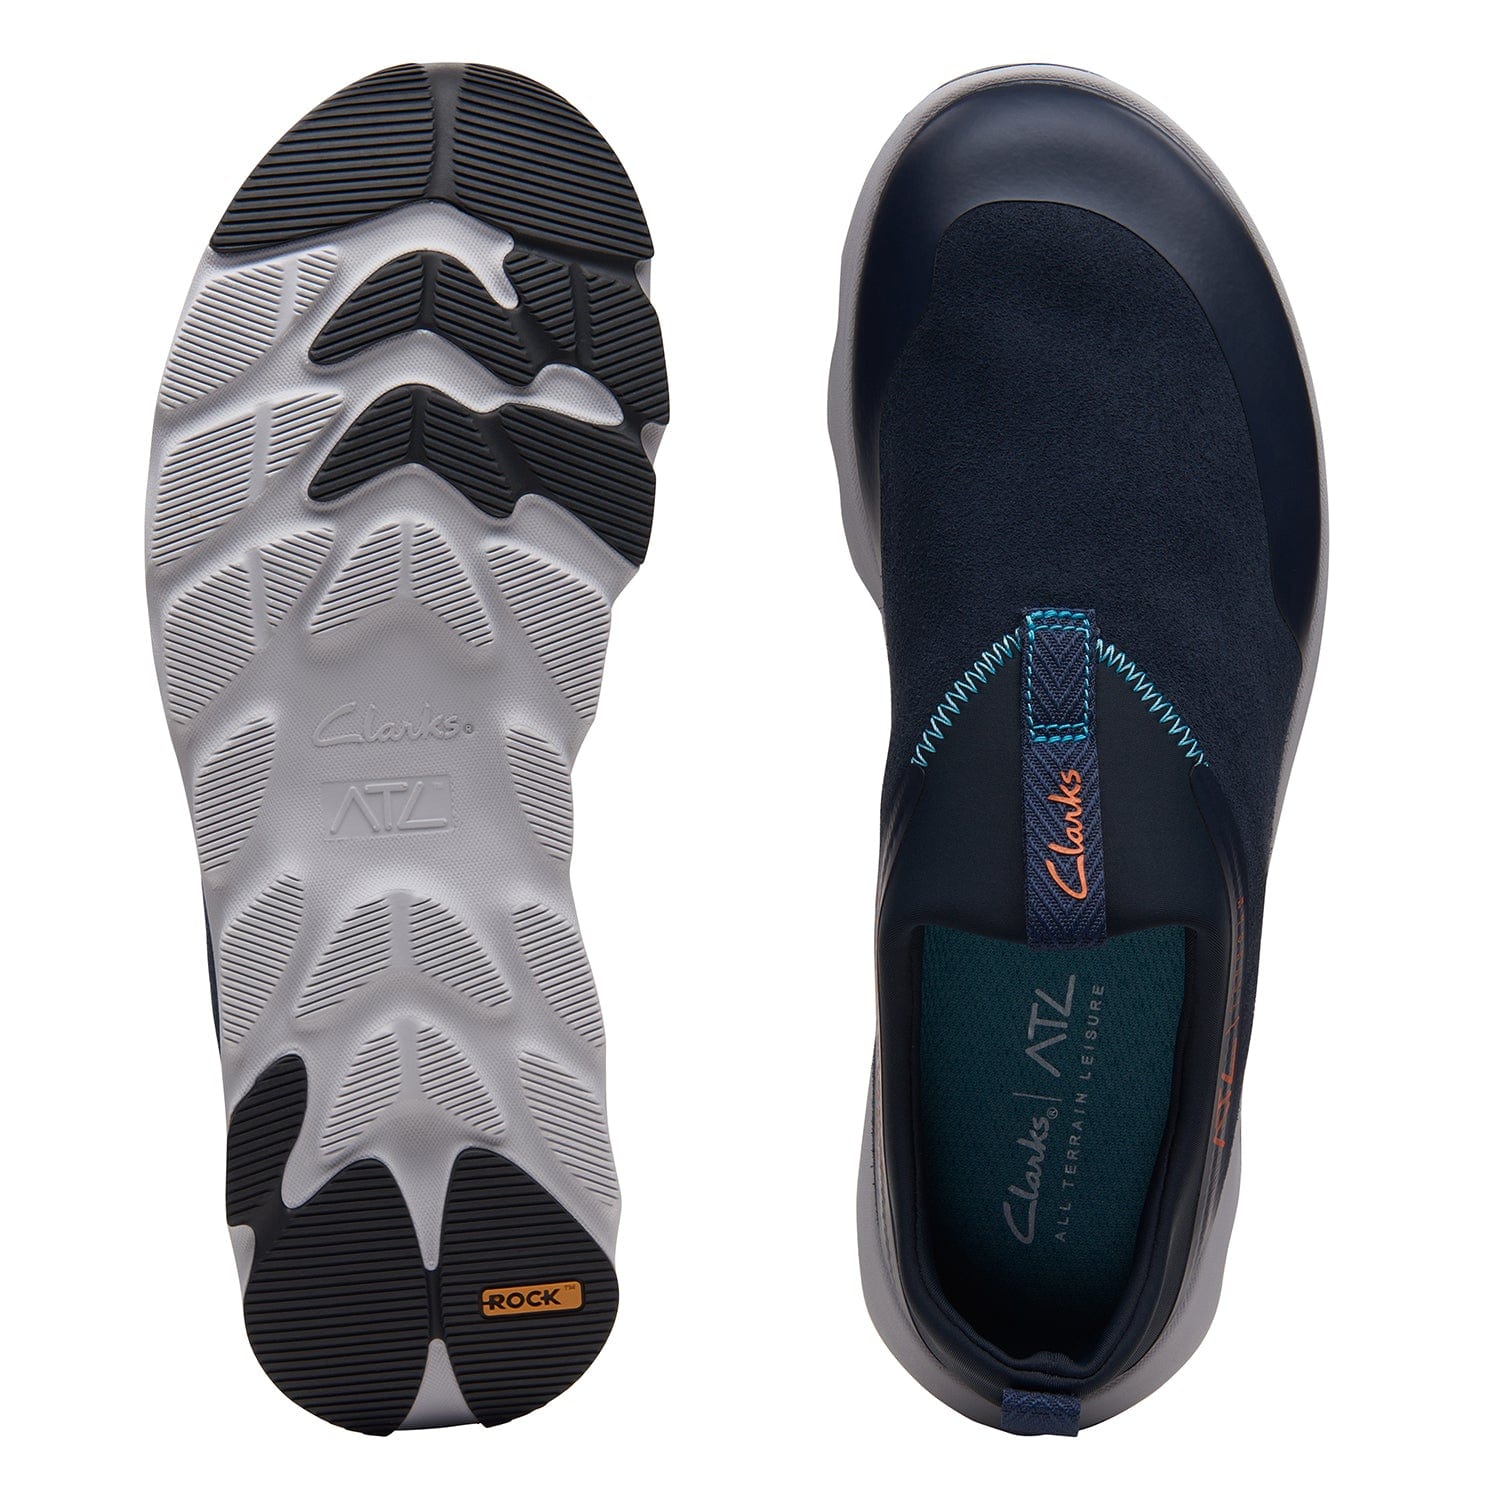 Clarks Atl Coast Moc - Shoes - Navy - 261705537 - G Width (Standard Fit)